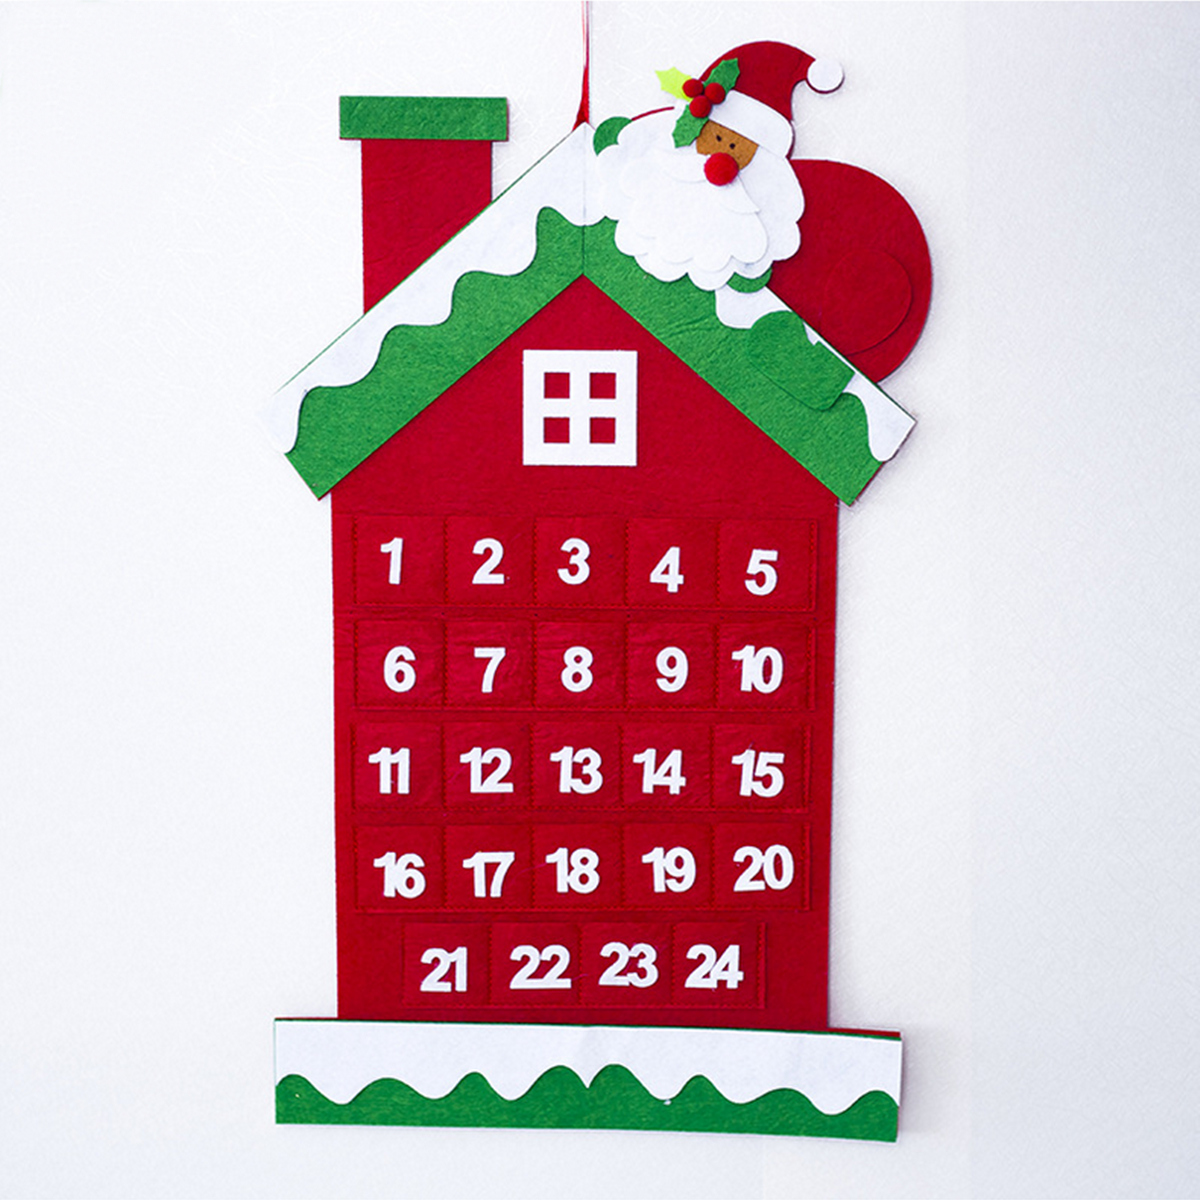 Christmas-Tree-Advent-Calendar-Felt-Fabric-Holiday-Countdown-Christmas-Display-Decor-1370488-5